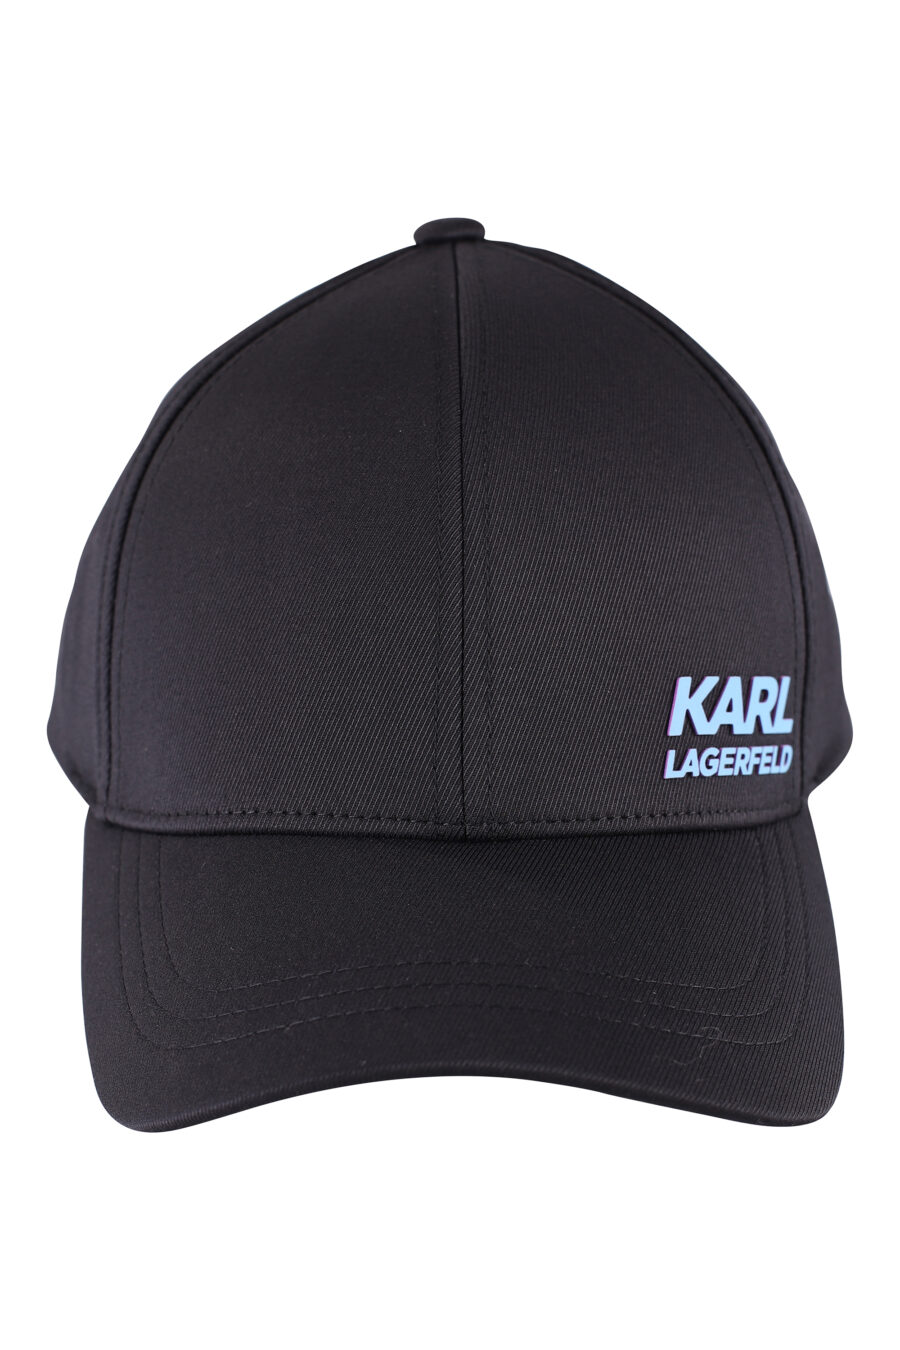 Black cap with sky blue logo - IMG 8526